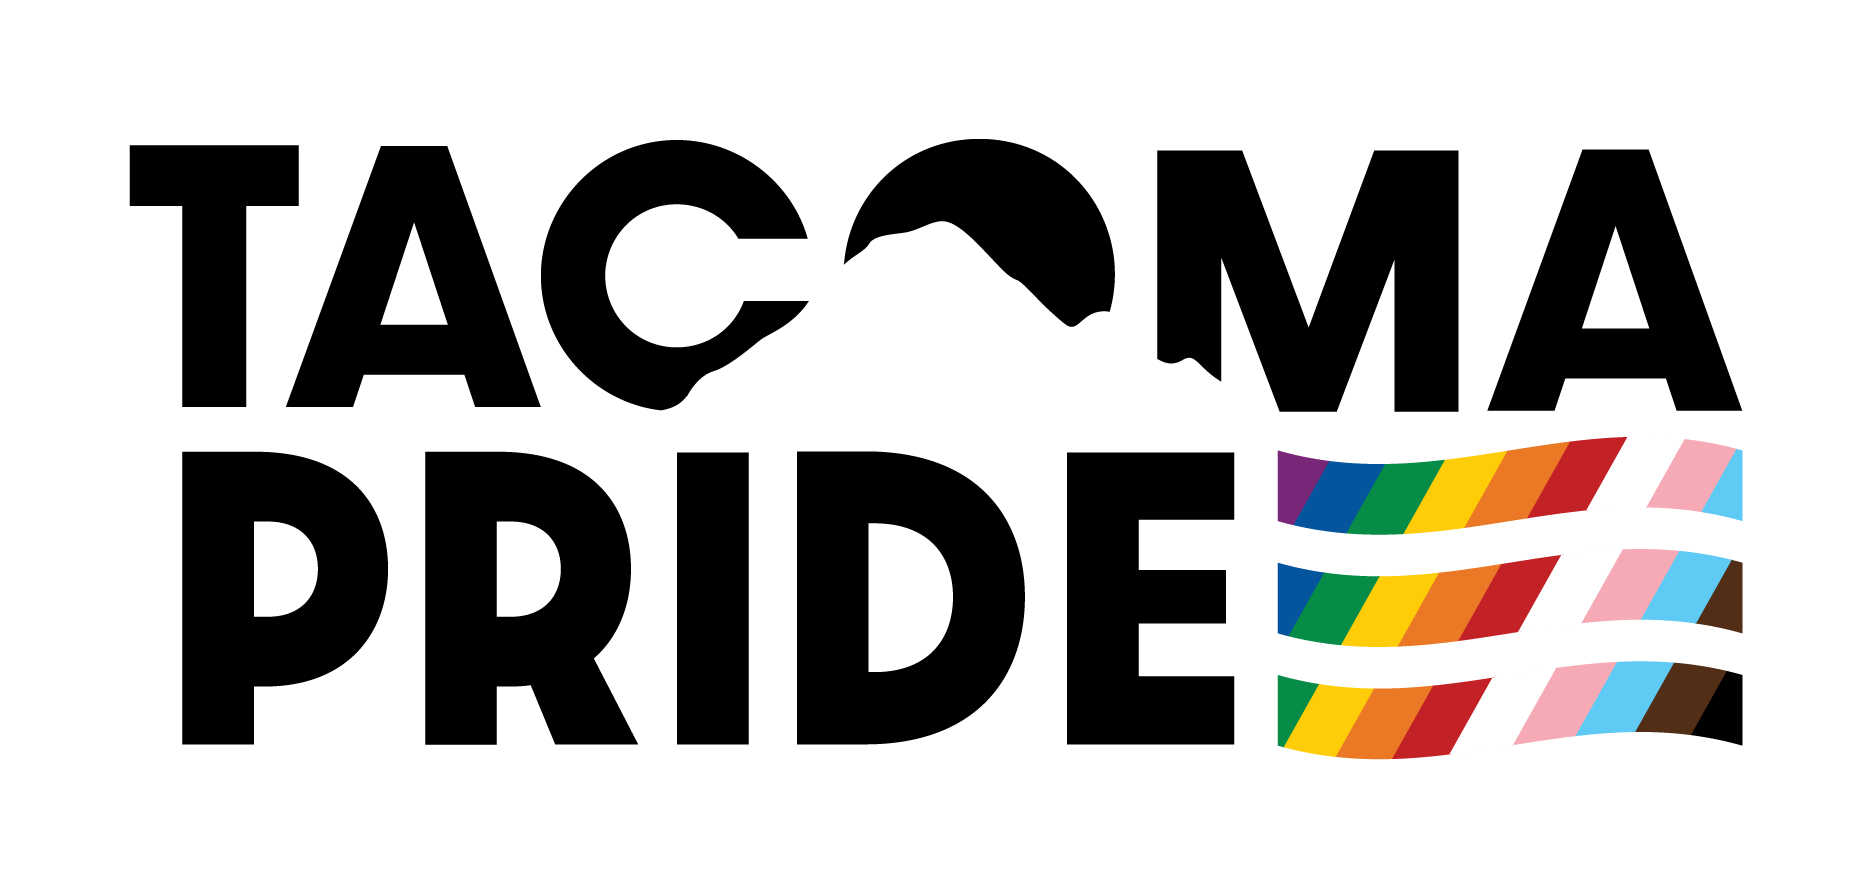 Tacoma Pride logo